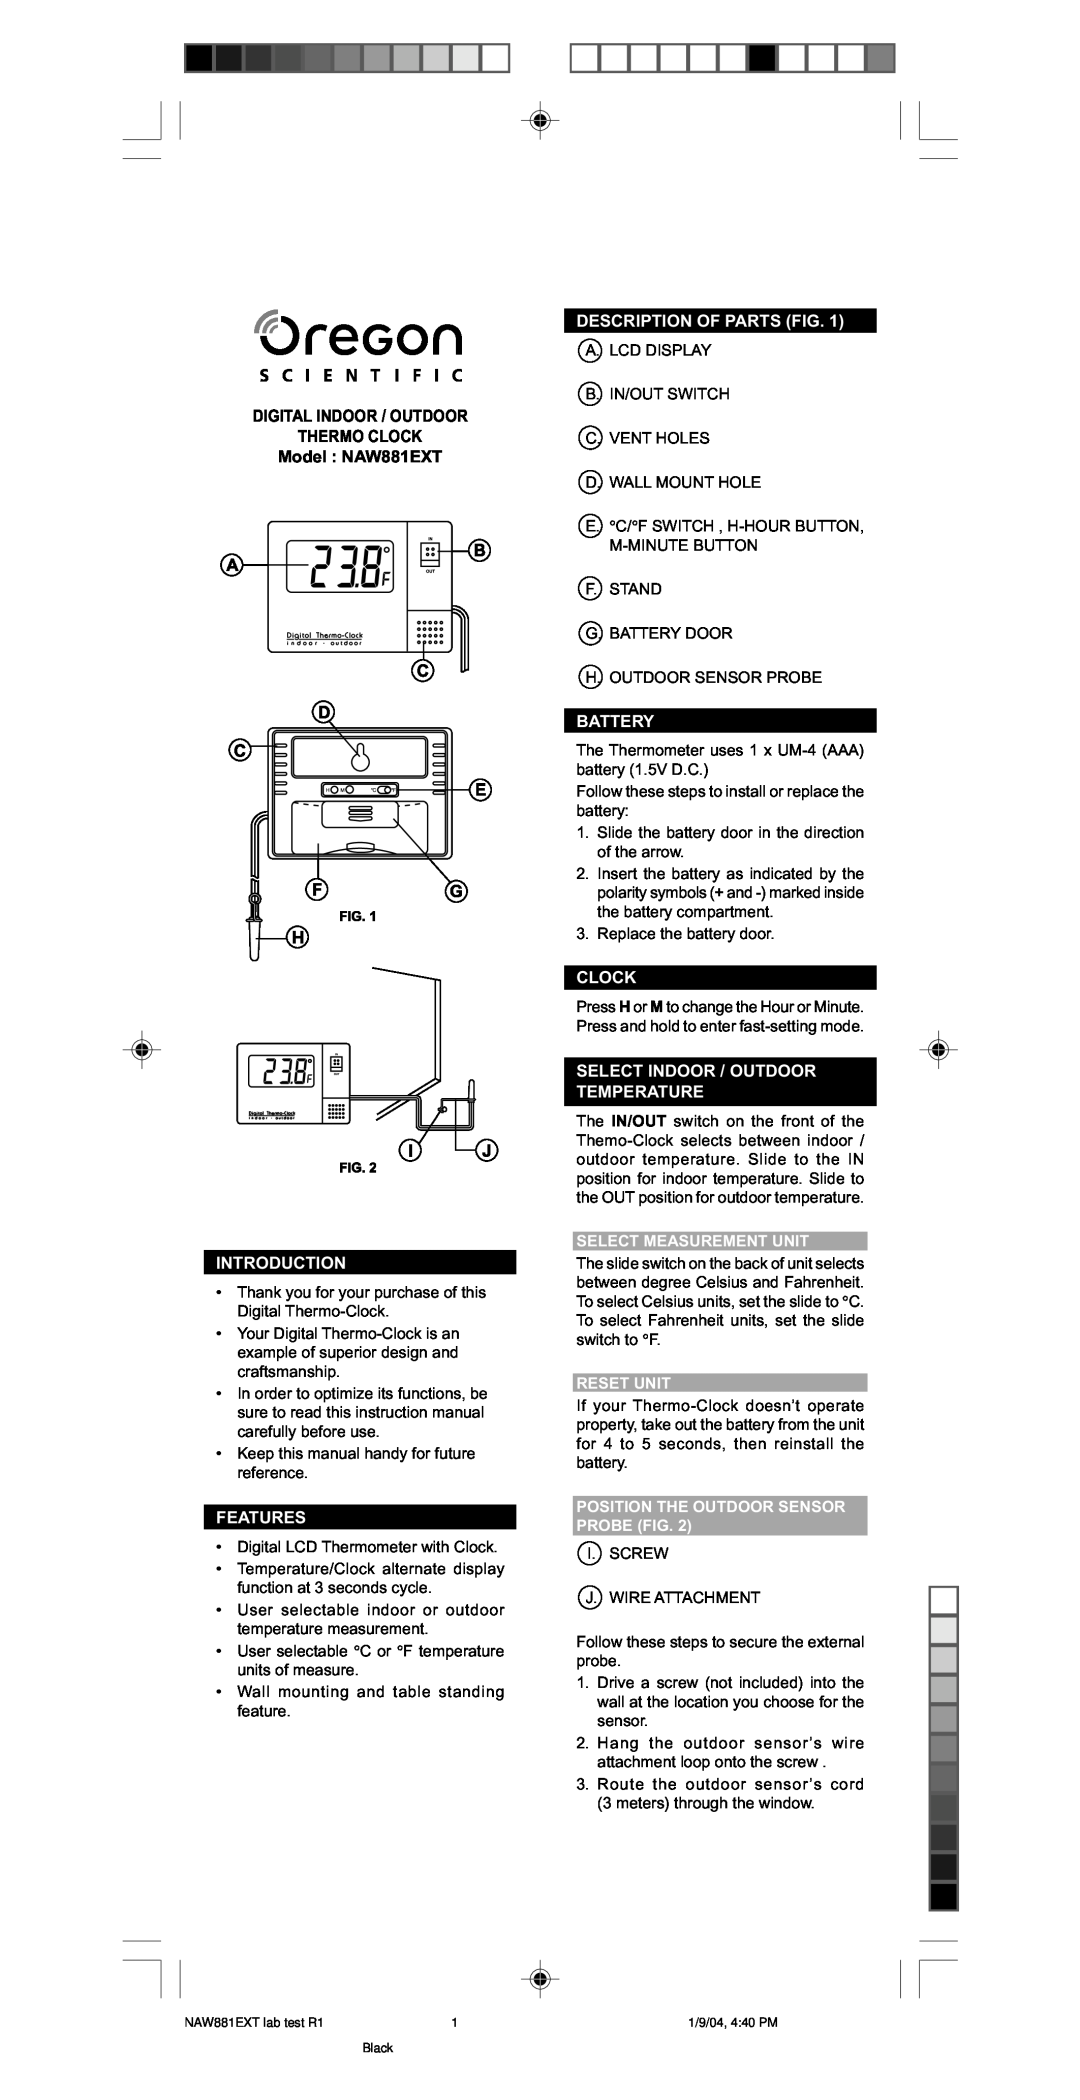 Oregon Scientific NAW881EXT instruction manual Introduction, Features, Description Of Parts Fig, Battery, Clock 